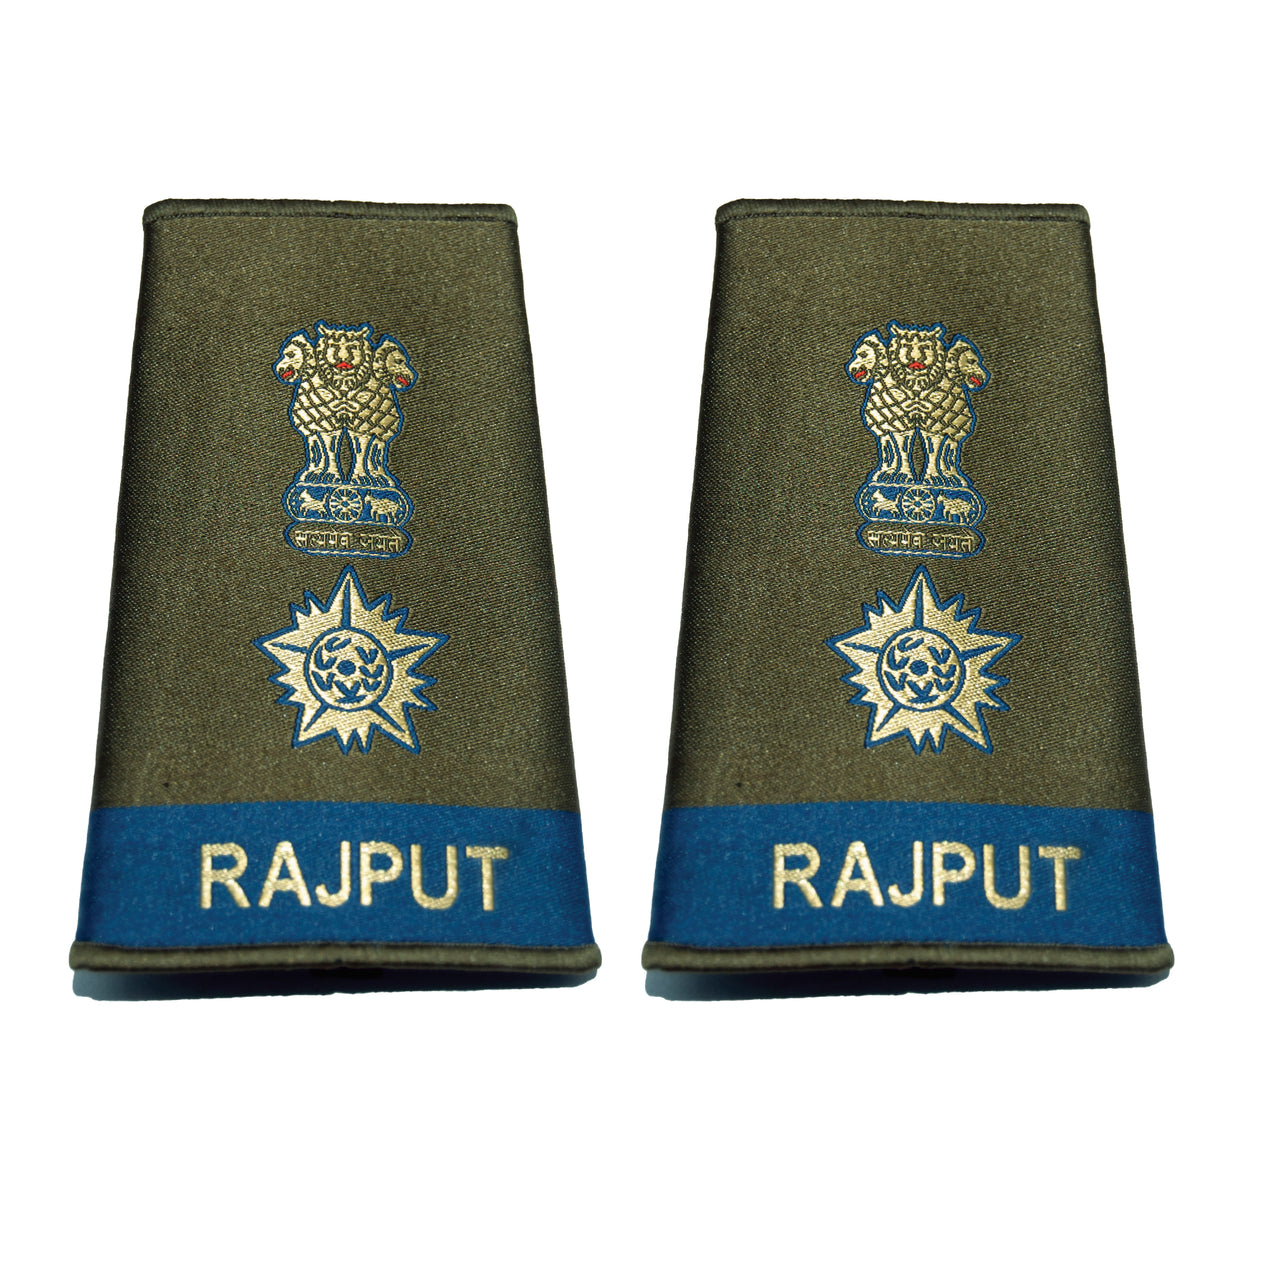 Indian Army Rank Epaulettes - Rajput Regiment